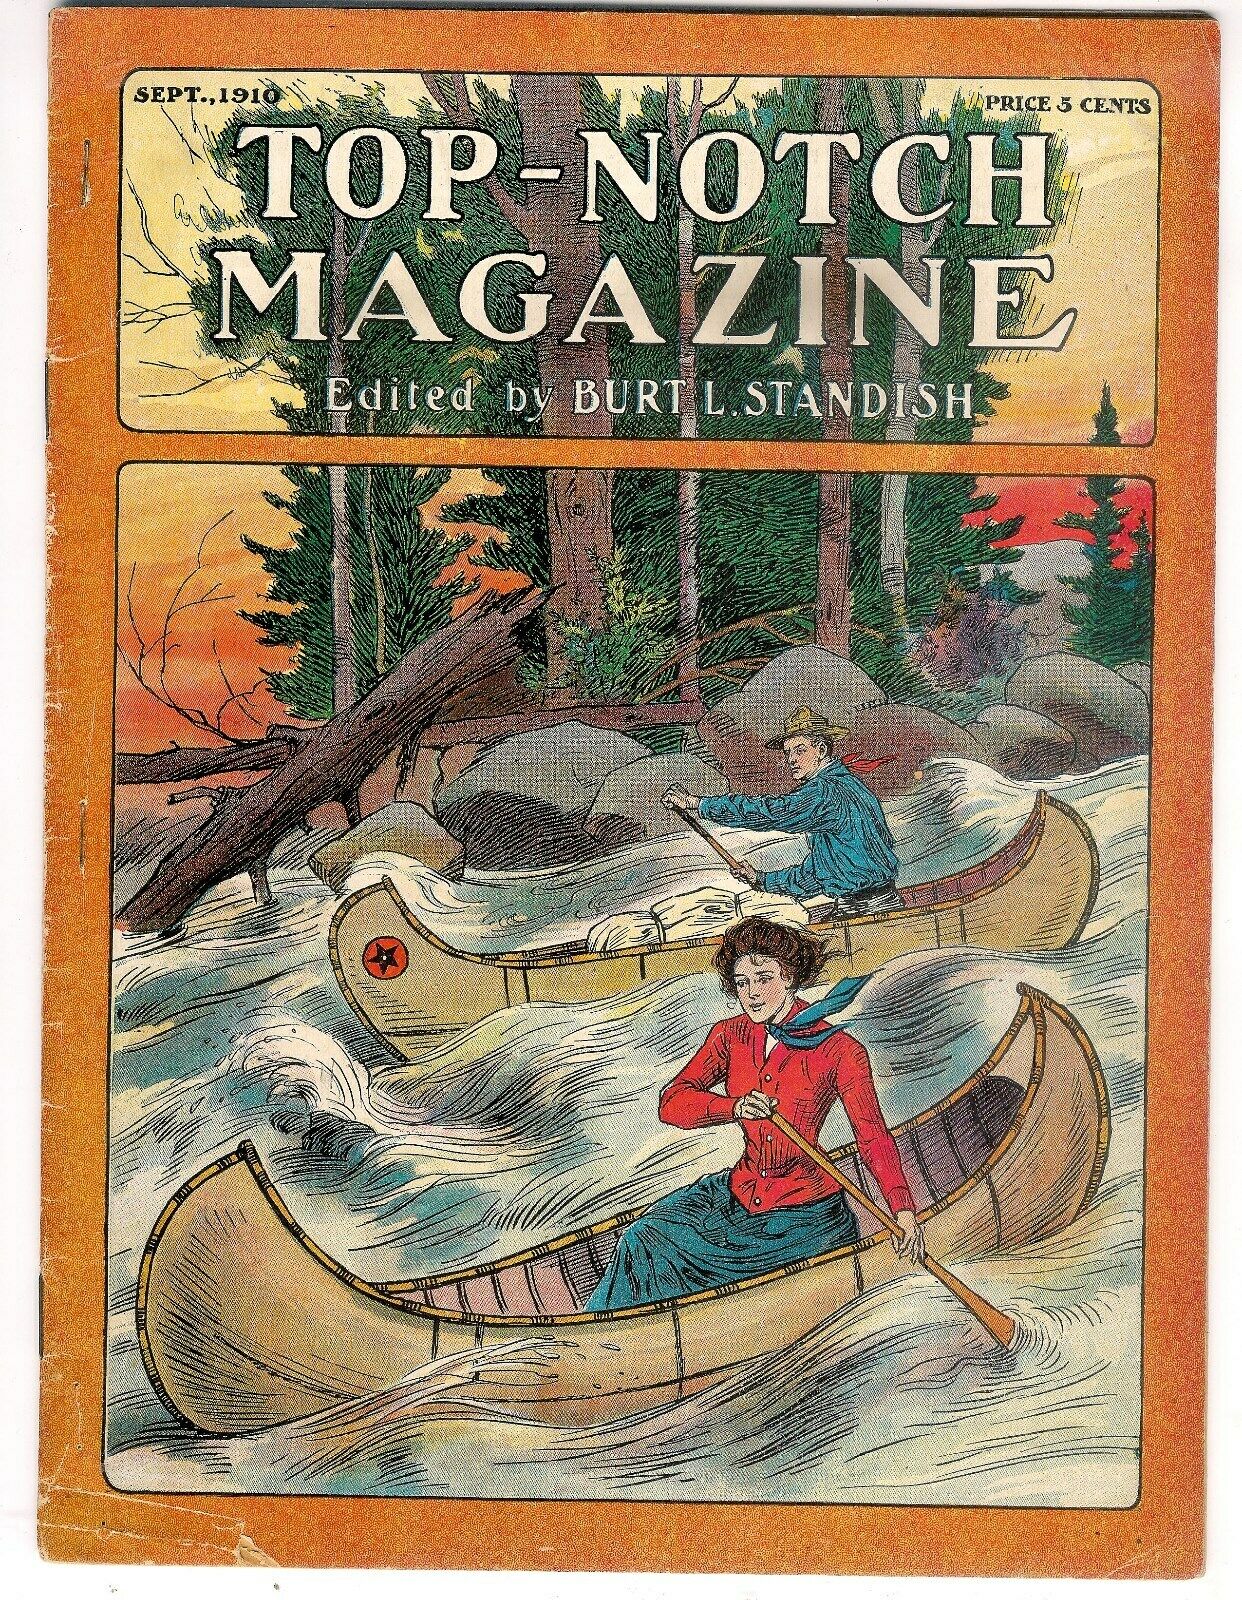 Top-Notch Magazine - September 1910